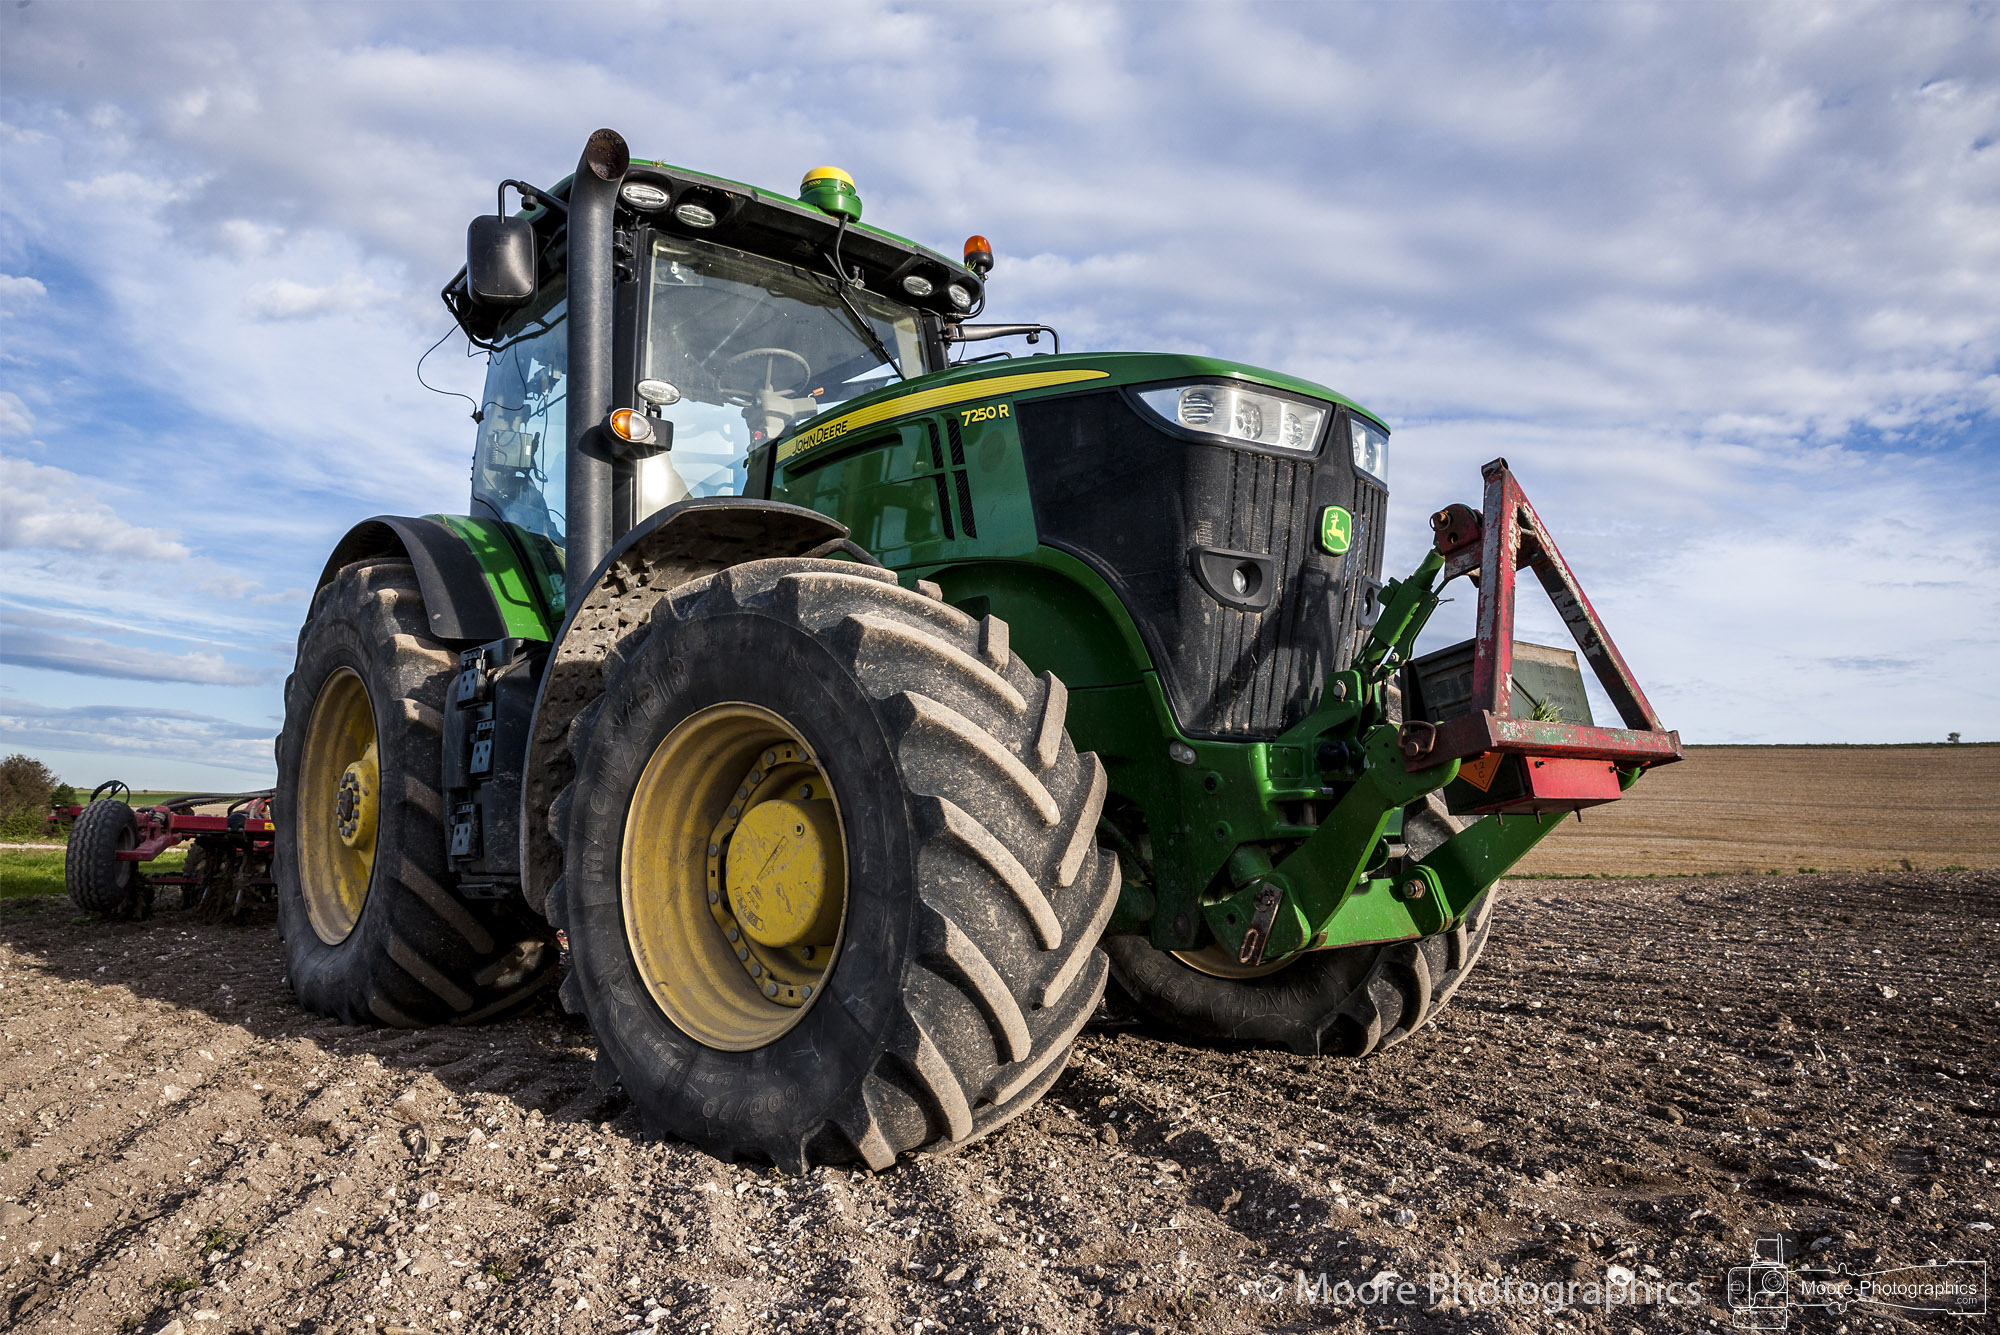 Moore Photographics - Farming - John Deere tractor